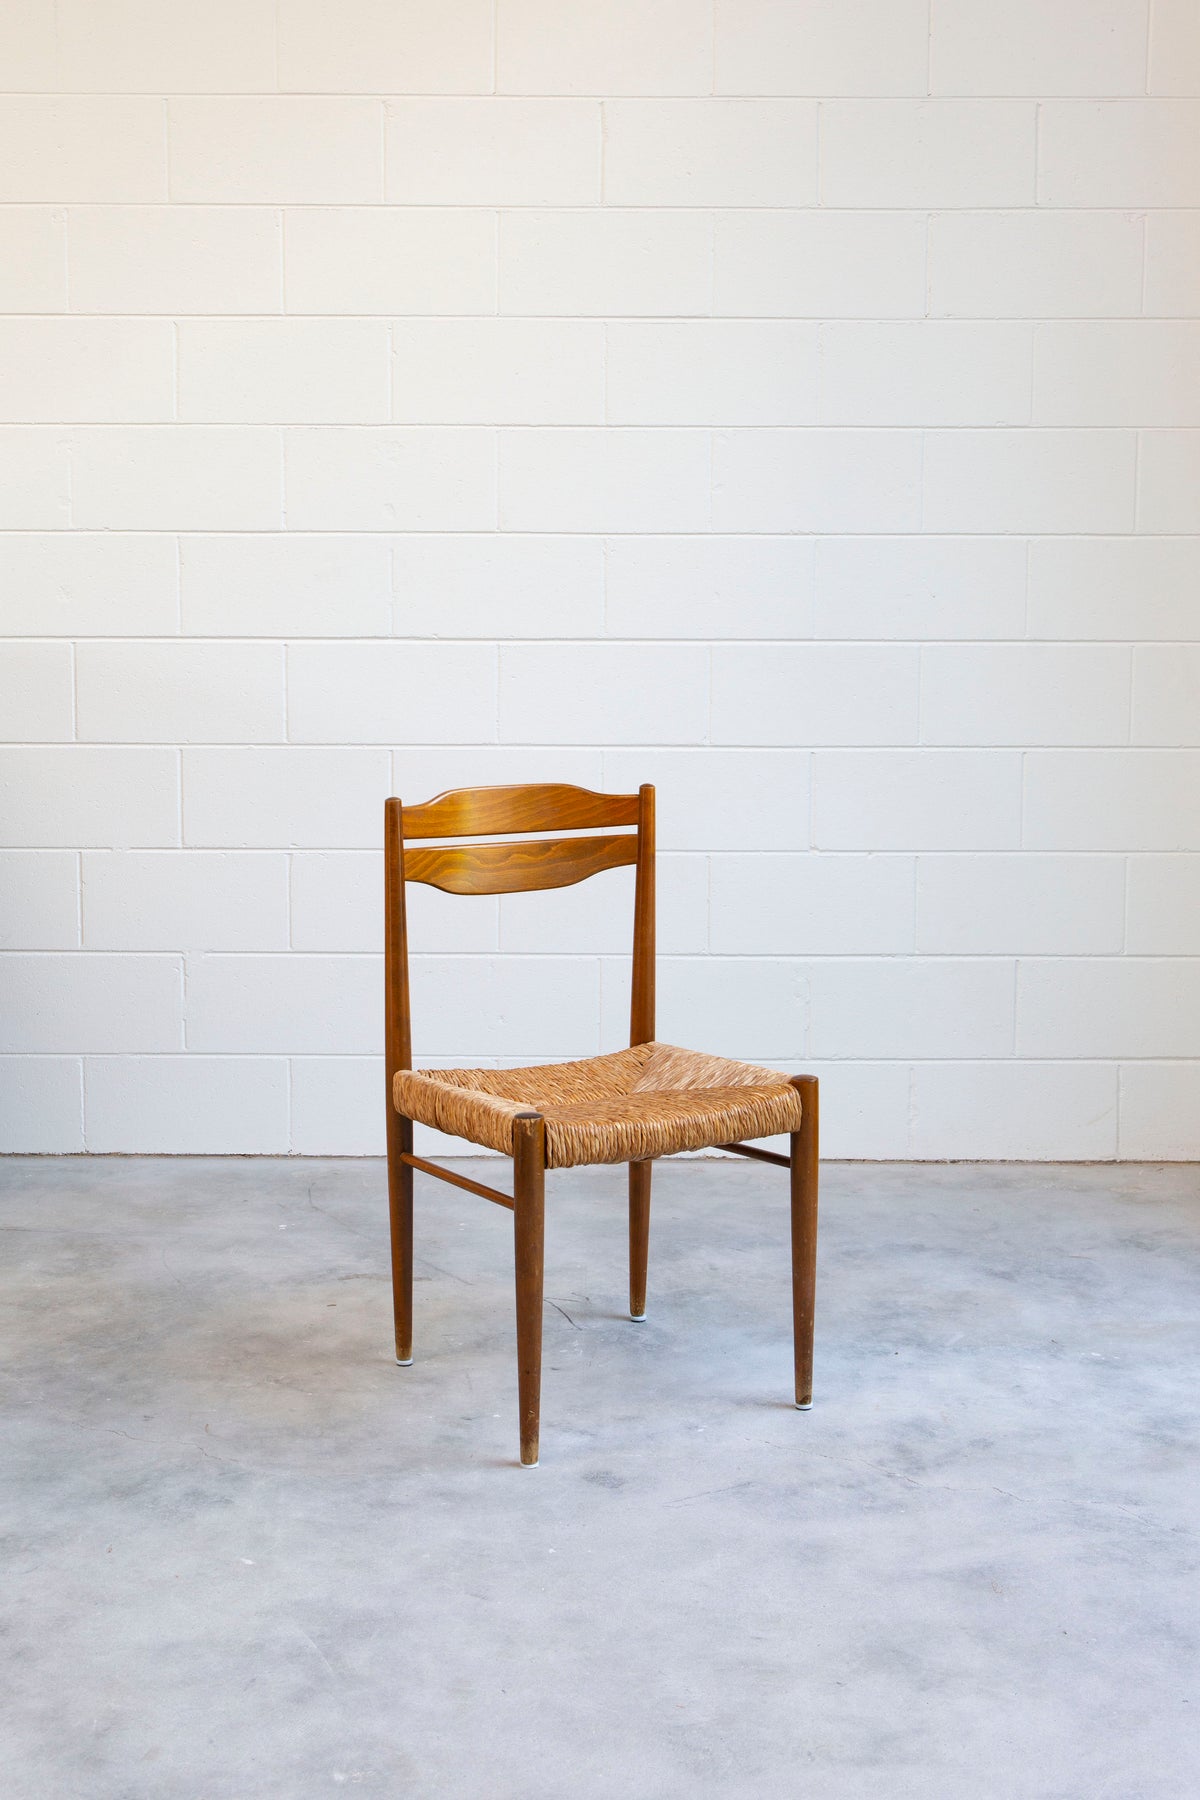 Danish Dining Chairs - Set of 4